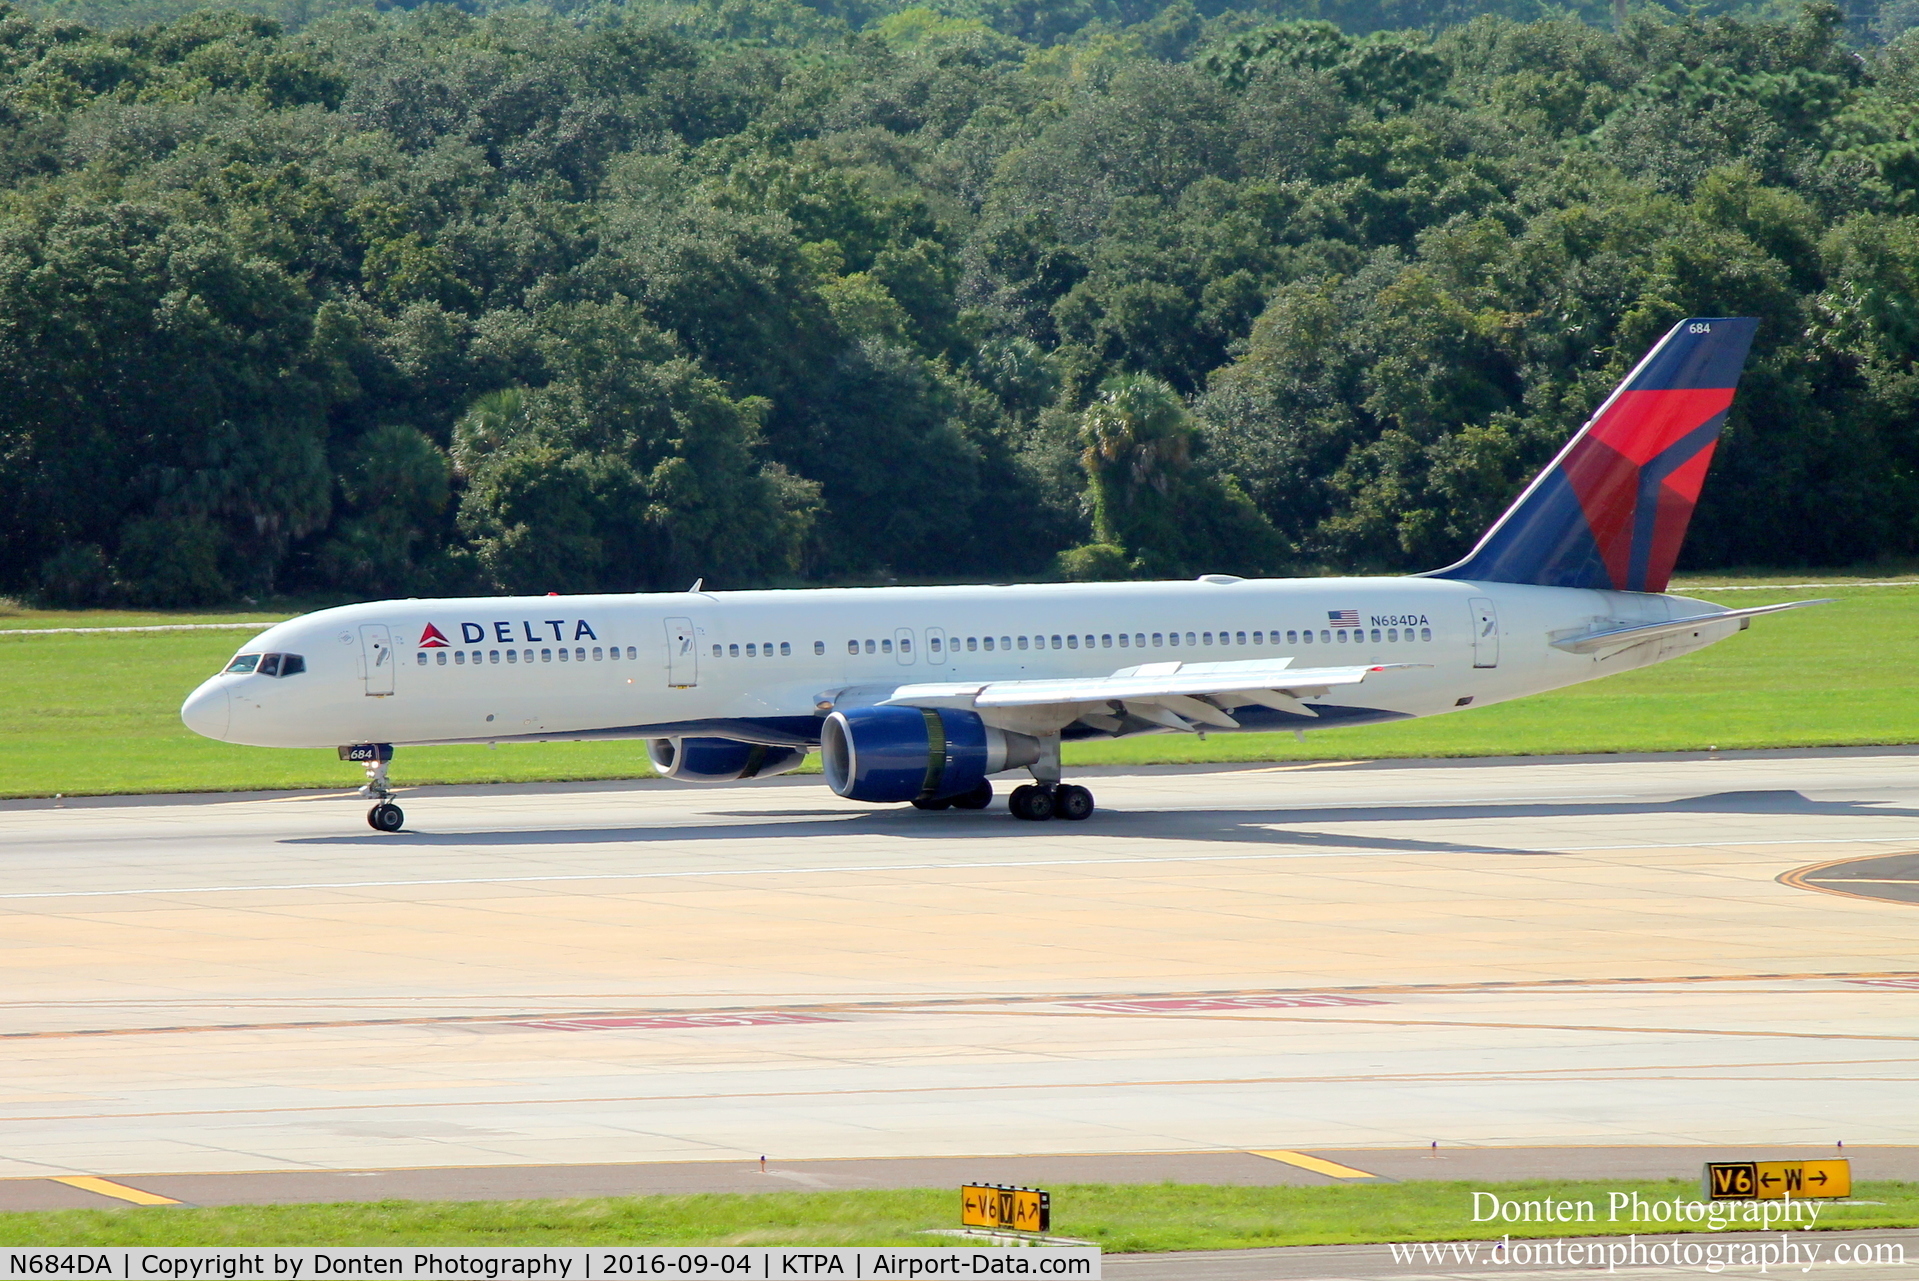 N684DA, 1993 Boeing 757-232 C/N 27104, Delta Flight 950 (N684DA) arrives at Tampa International Airport following flight from Hartsfield-Jackson Atlanta International Airport